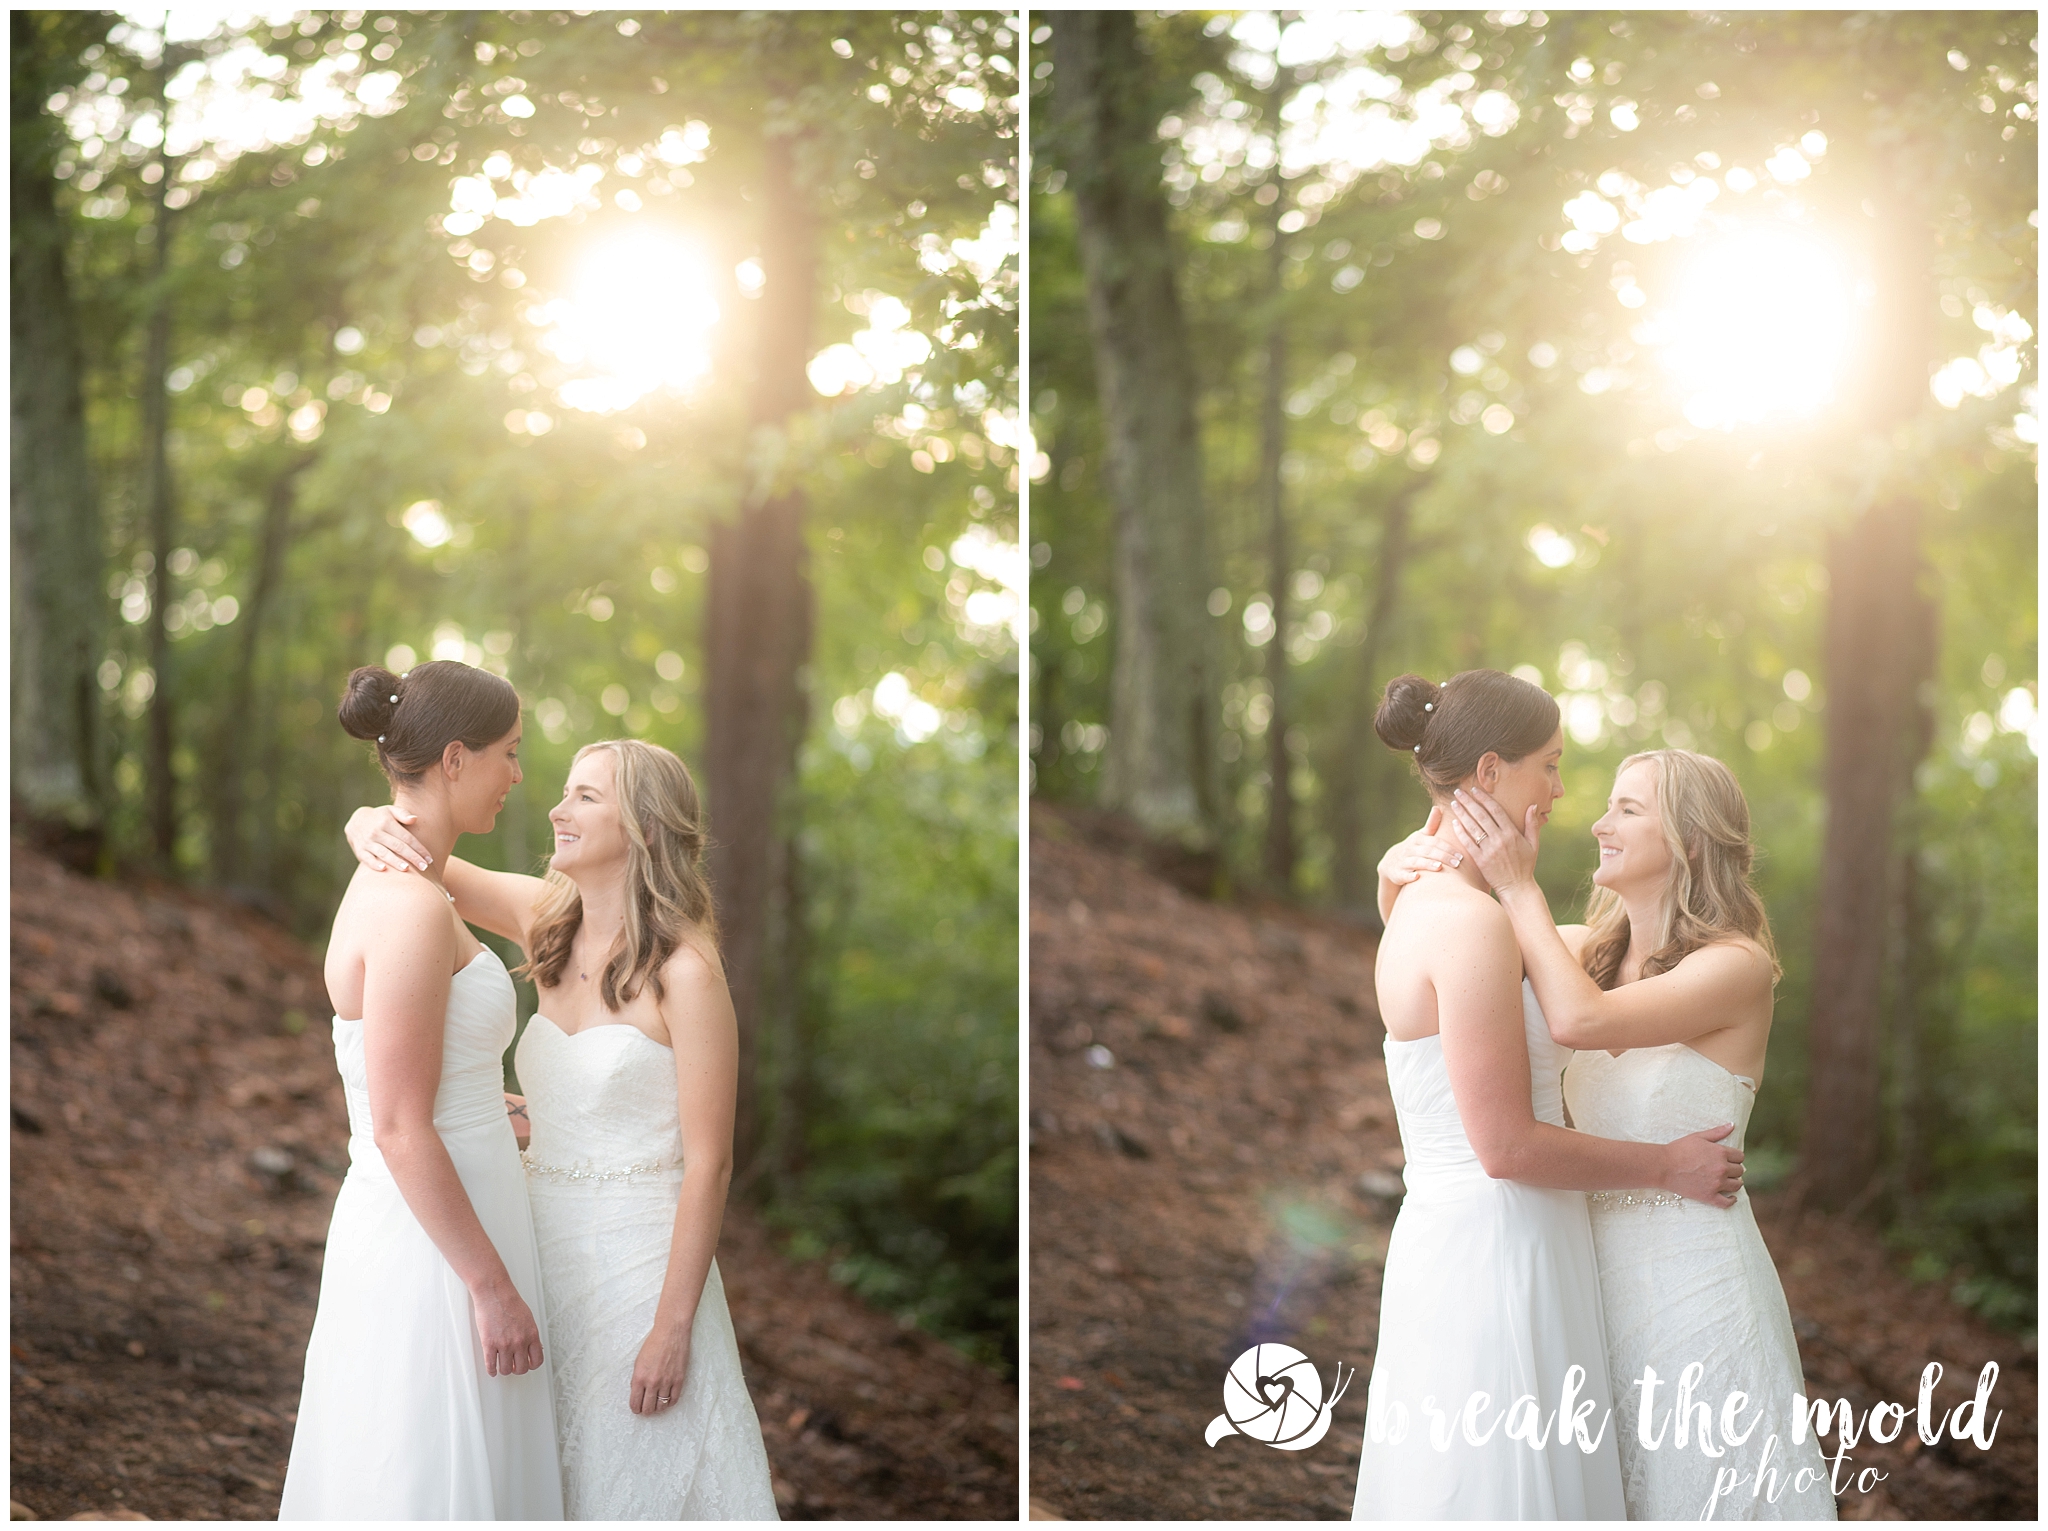 break-the-mold-photo-magnolia-gatlinburg-wedding-photographer-smoky-mountains-same-sex-lesbian-gay-wedding-rainbow-beautiful_0972.jpg